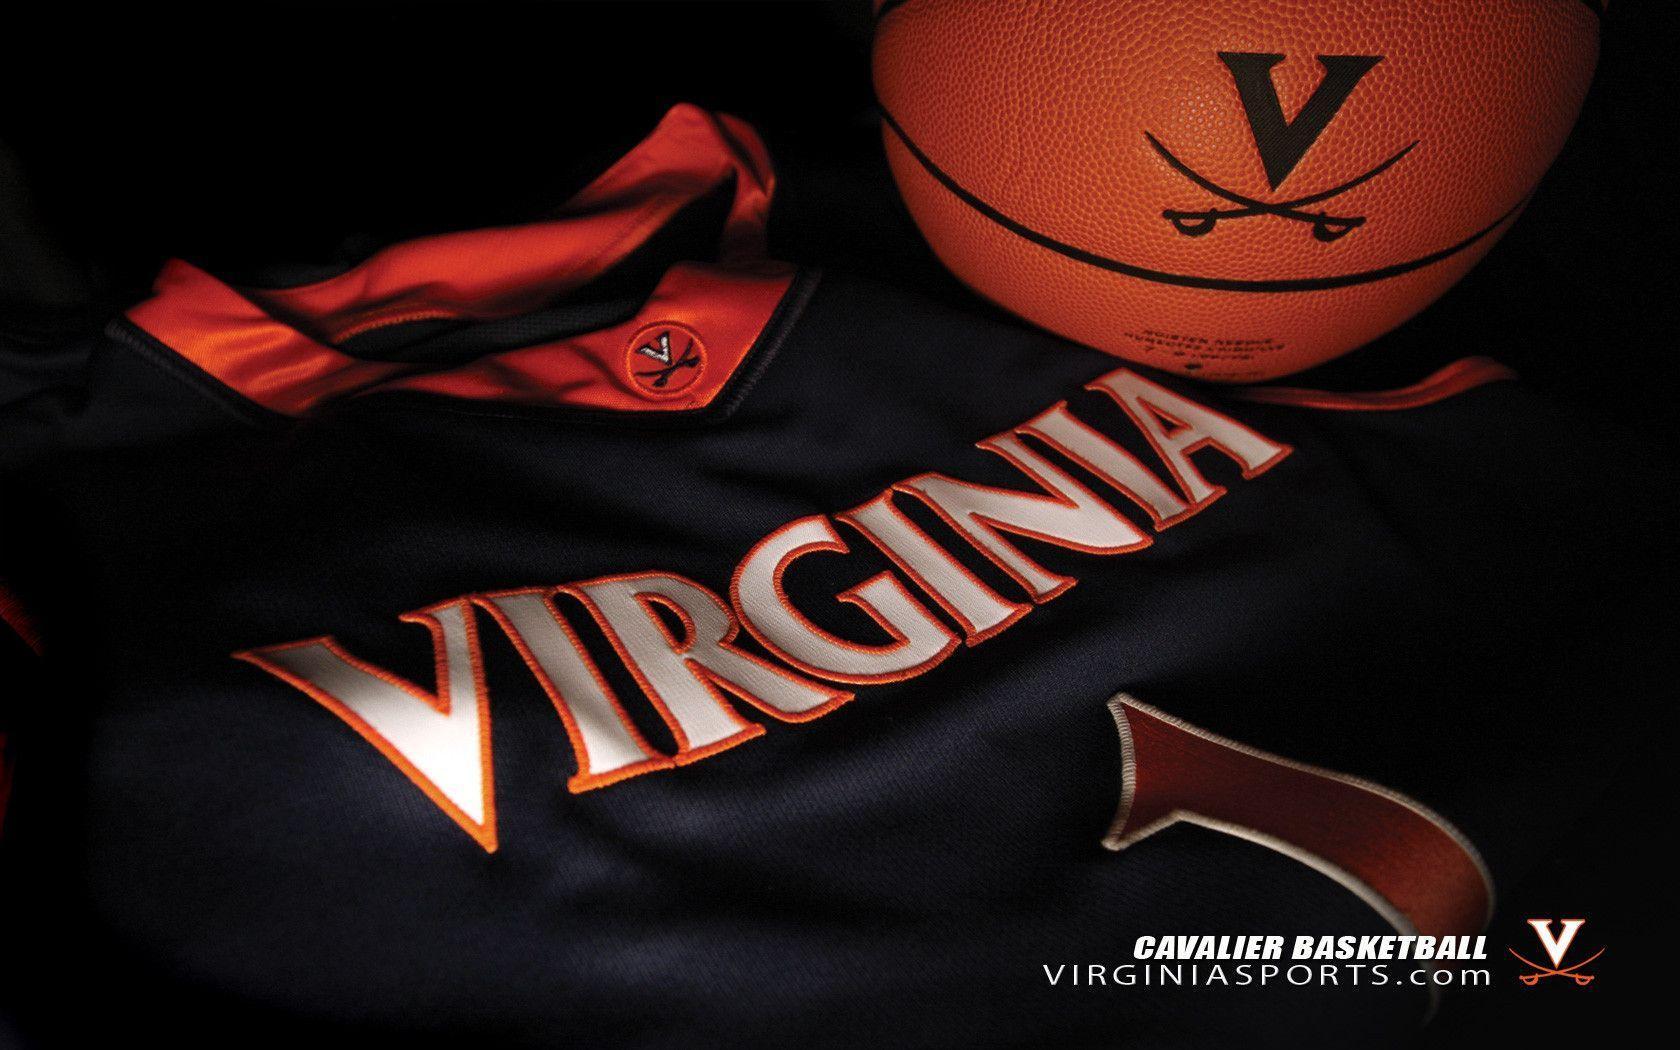 VirginiaSports.com of Virginia Official Athletics